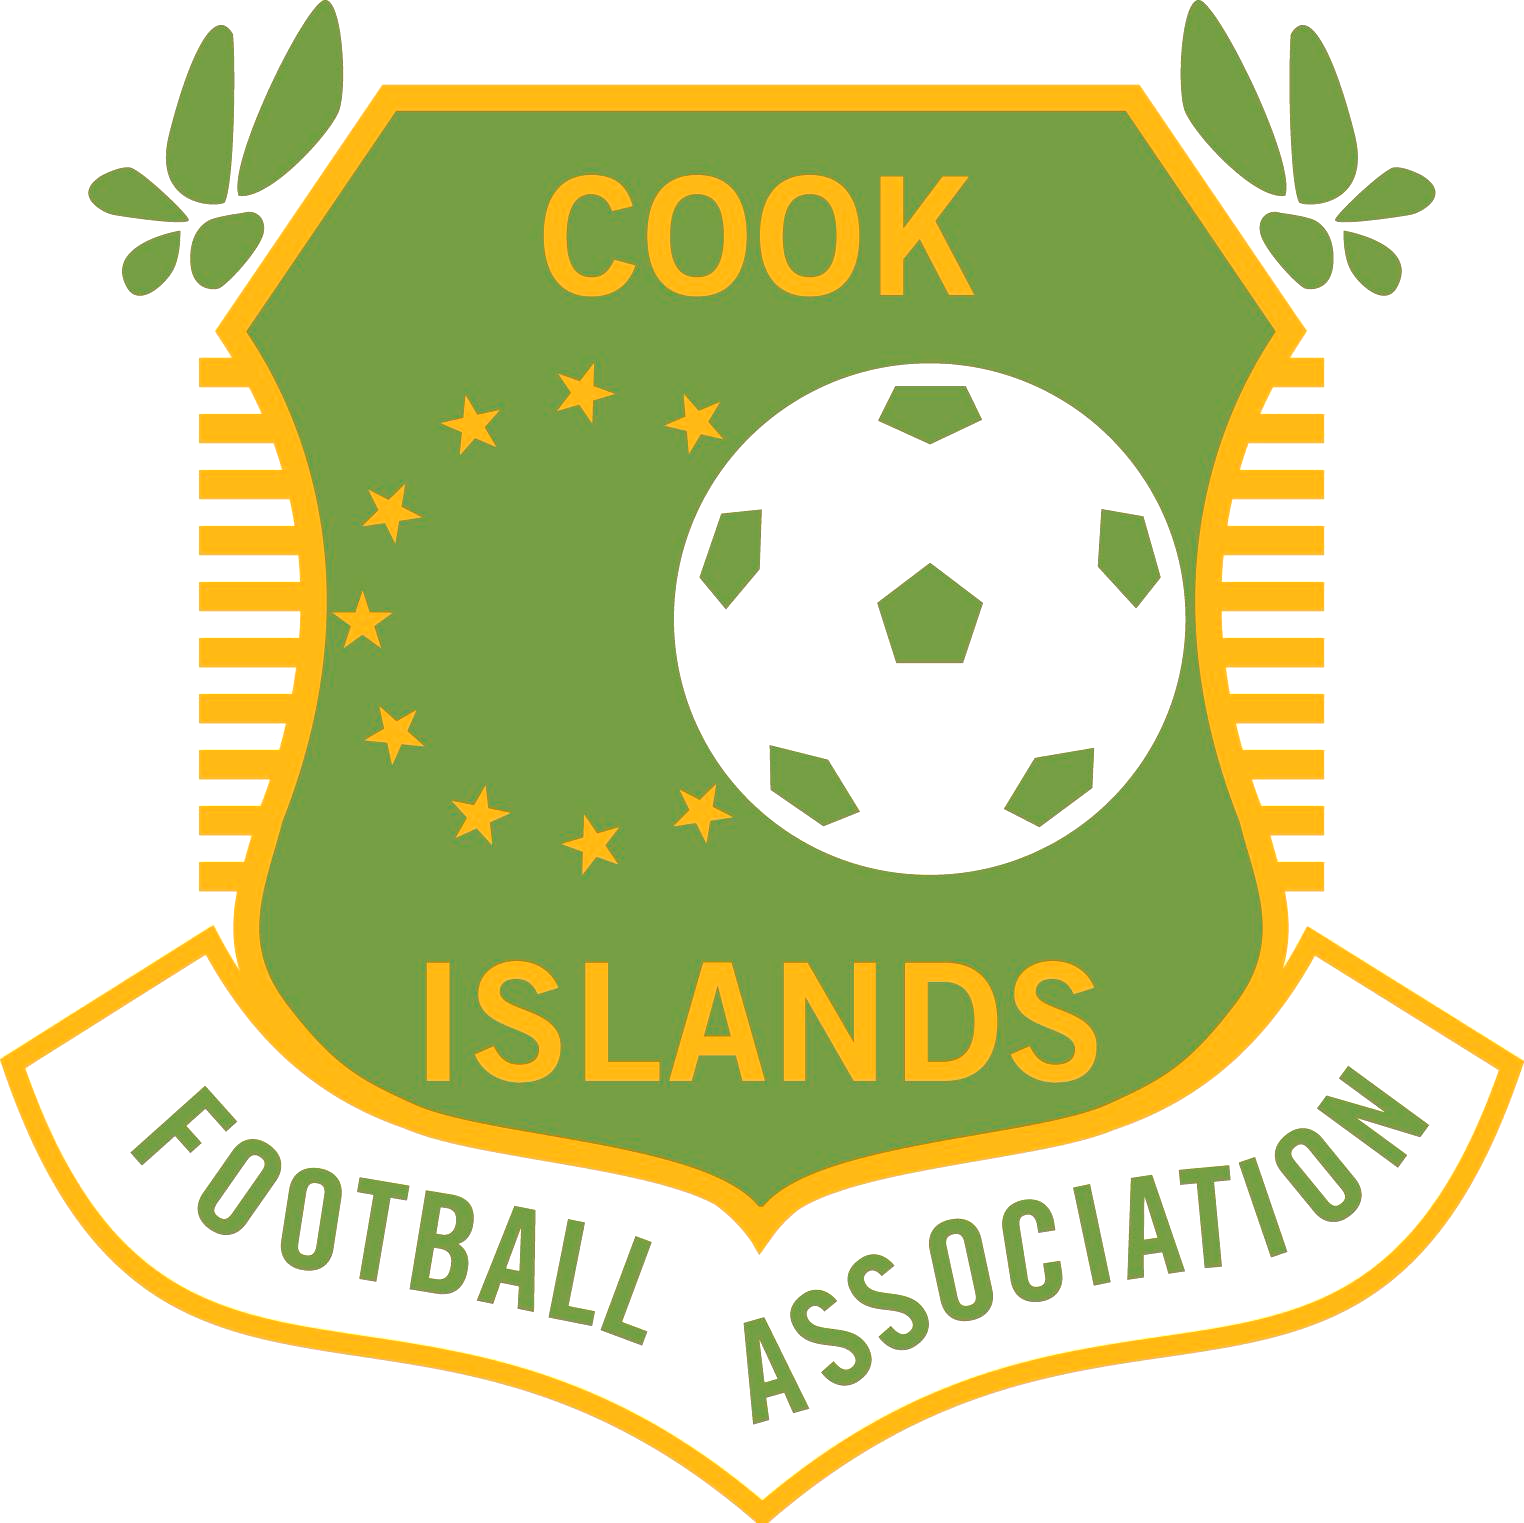 Image result for COOK ISLANDS FOOTBALL ASSOCIATION